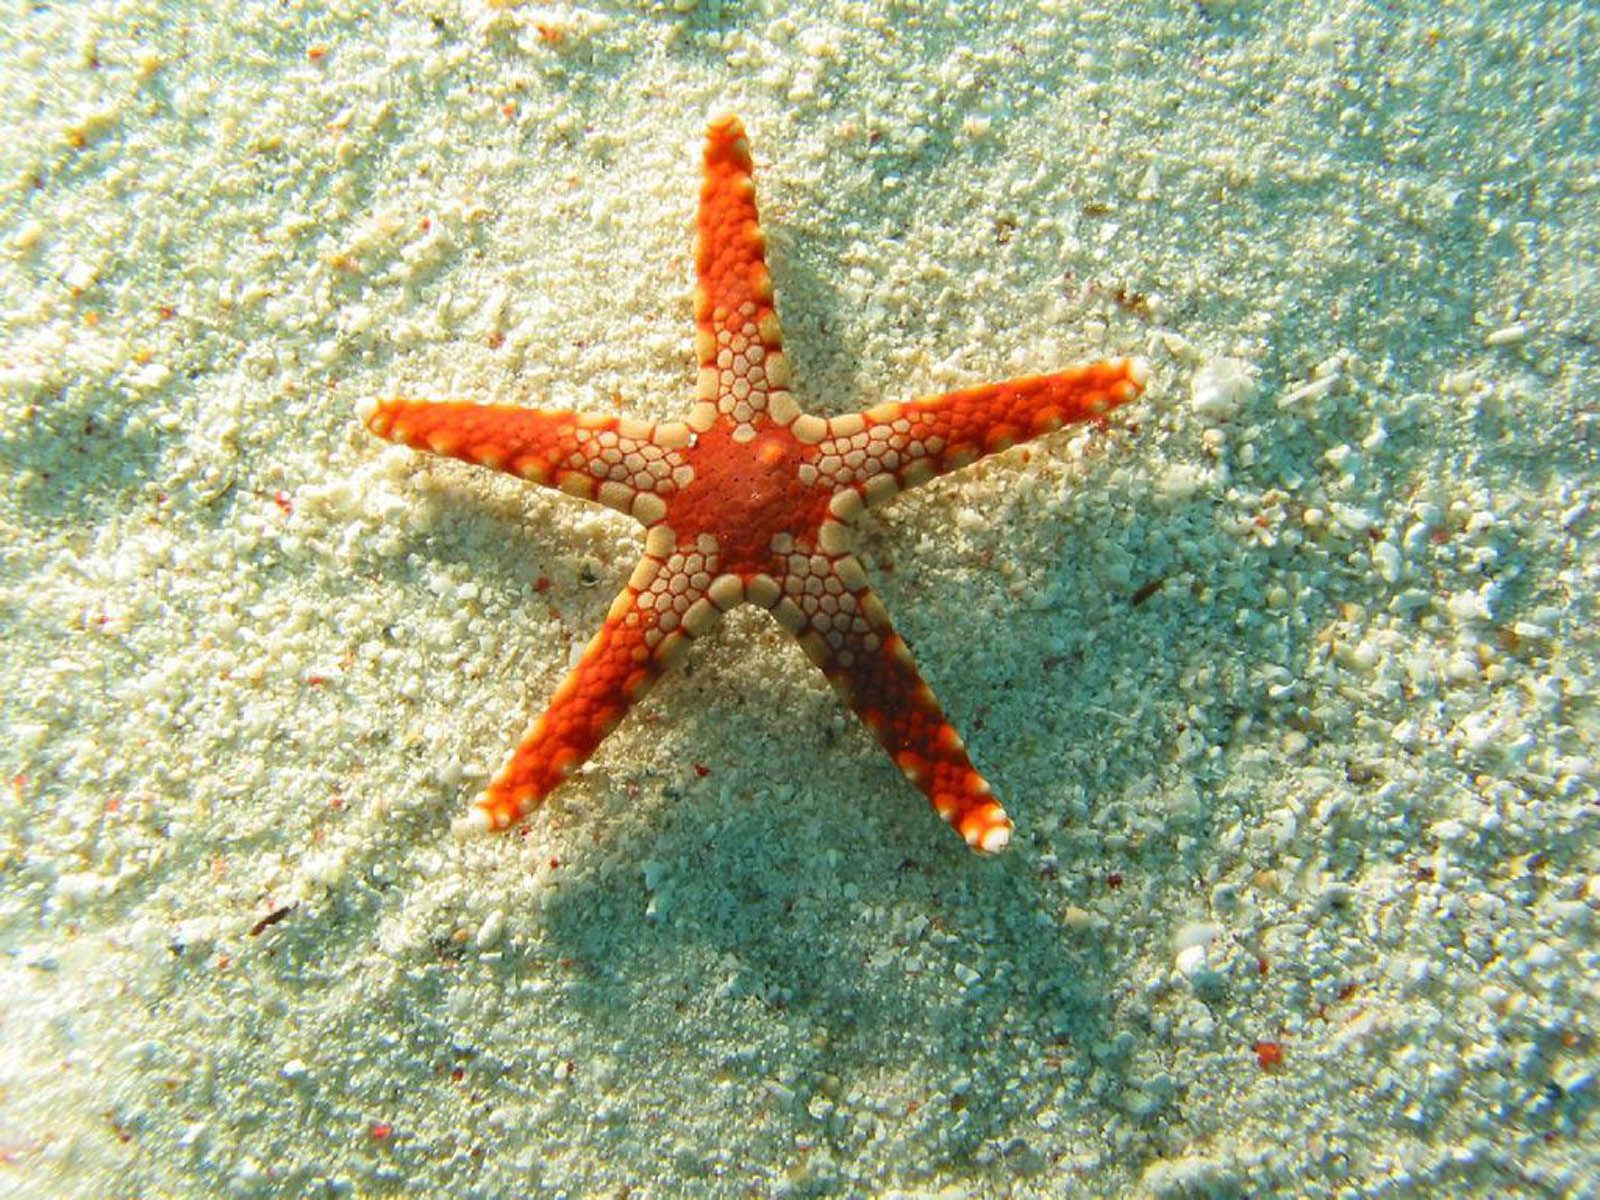 A starfish on the sand - Starfish